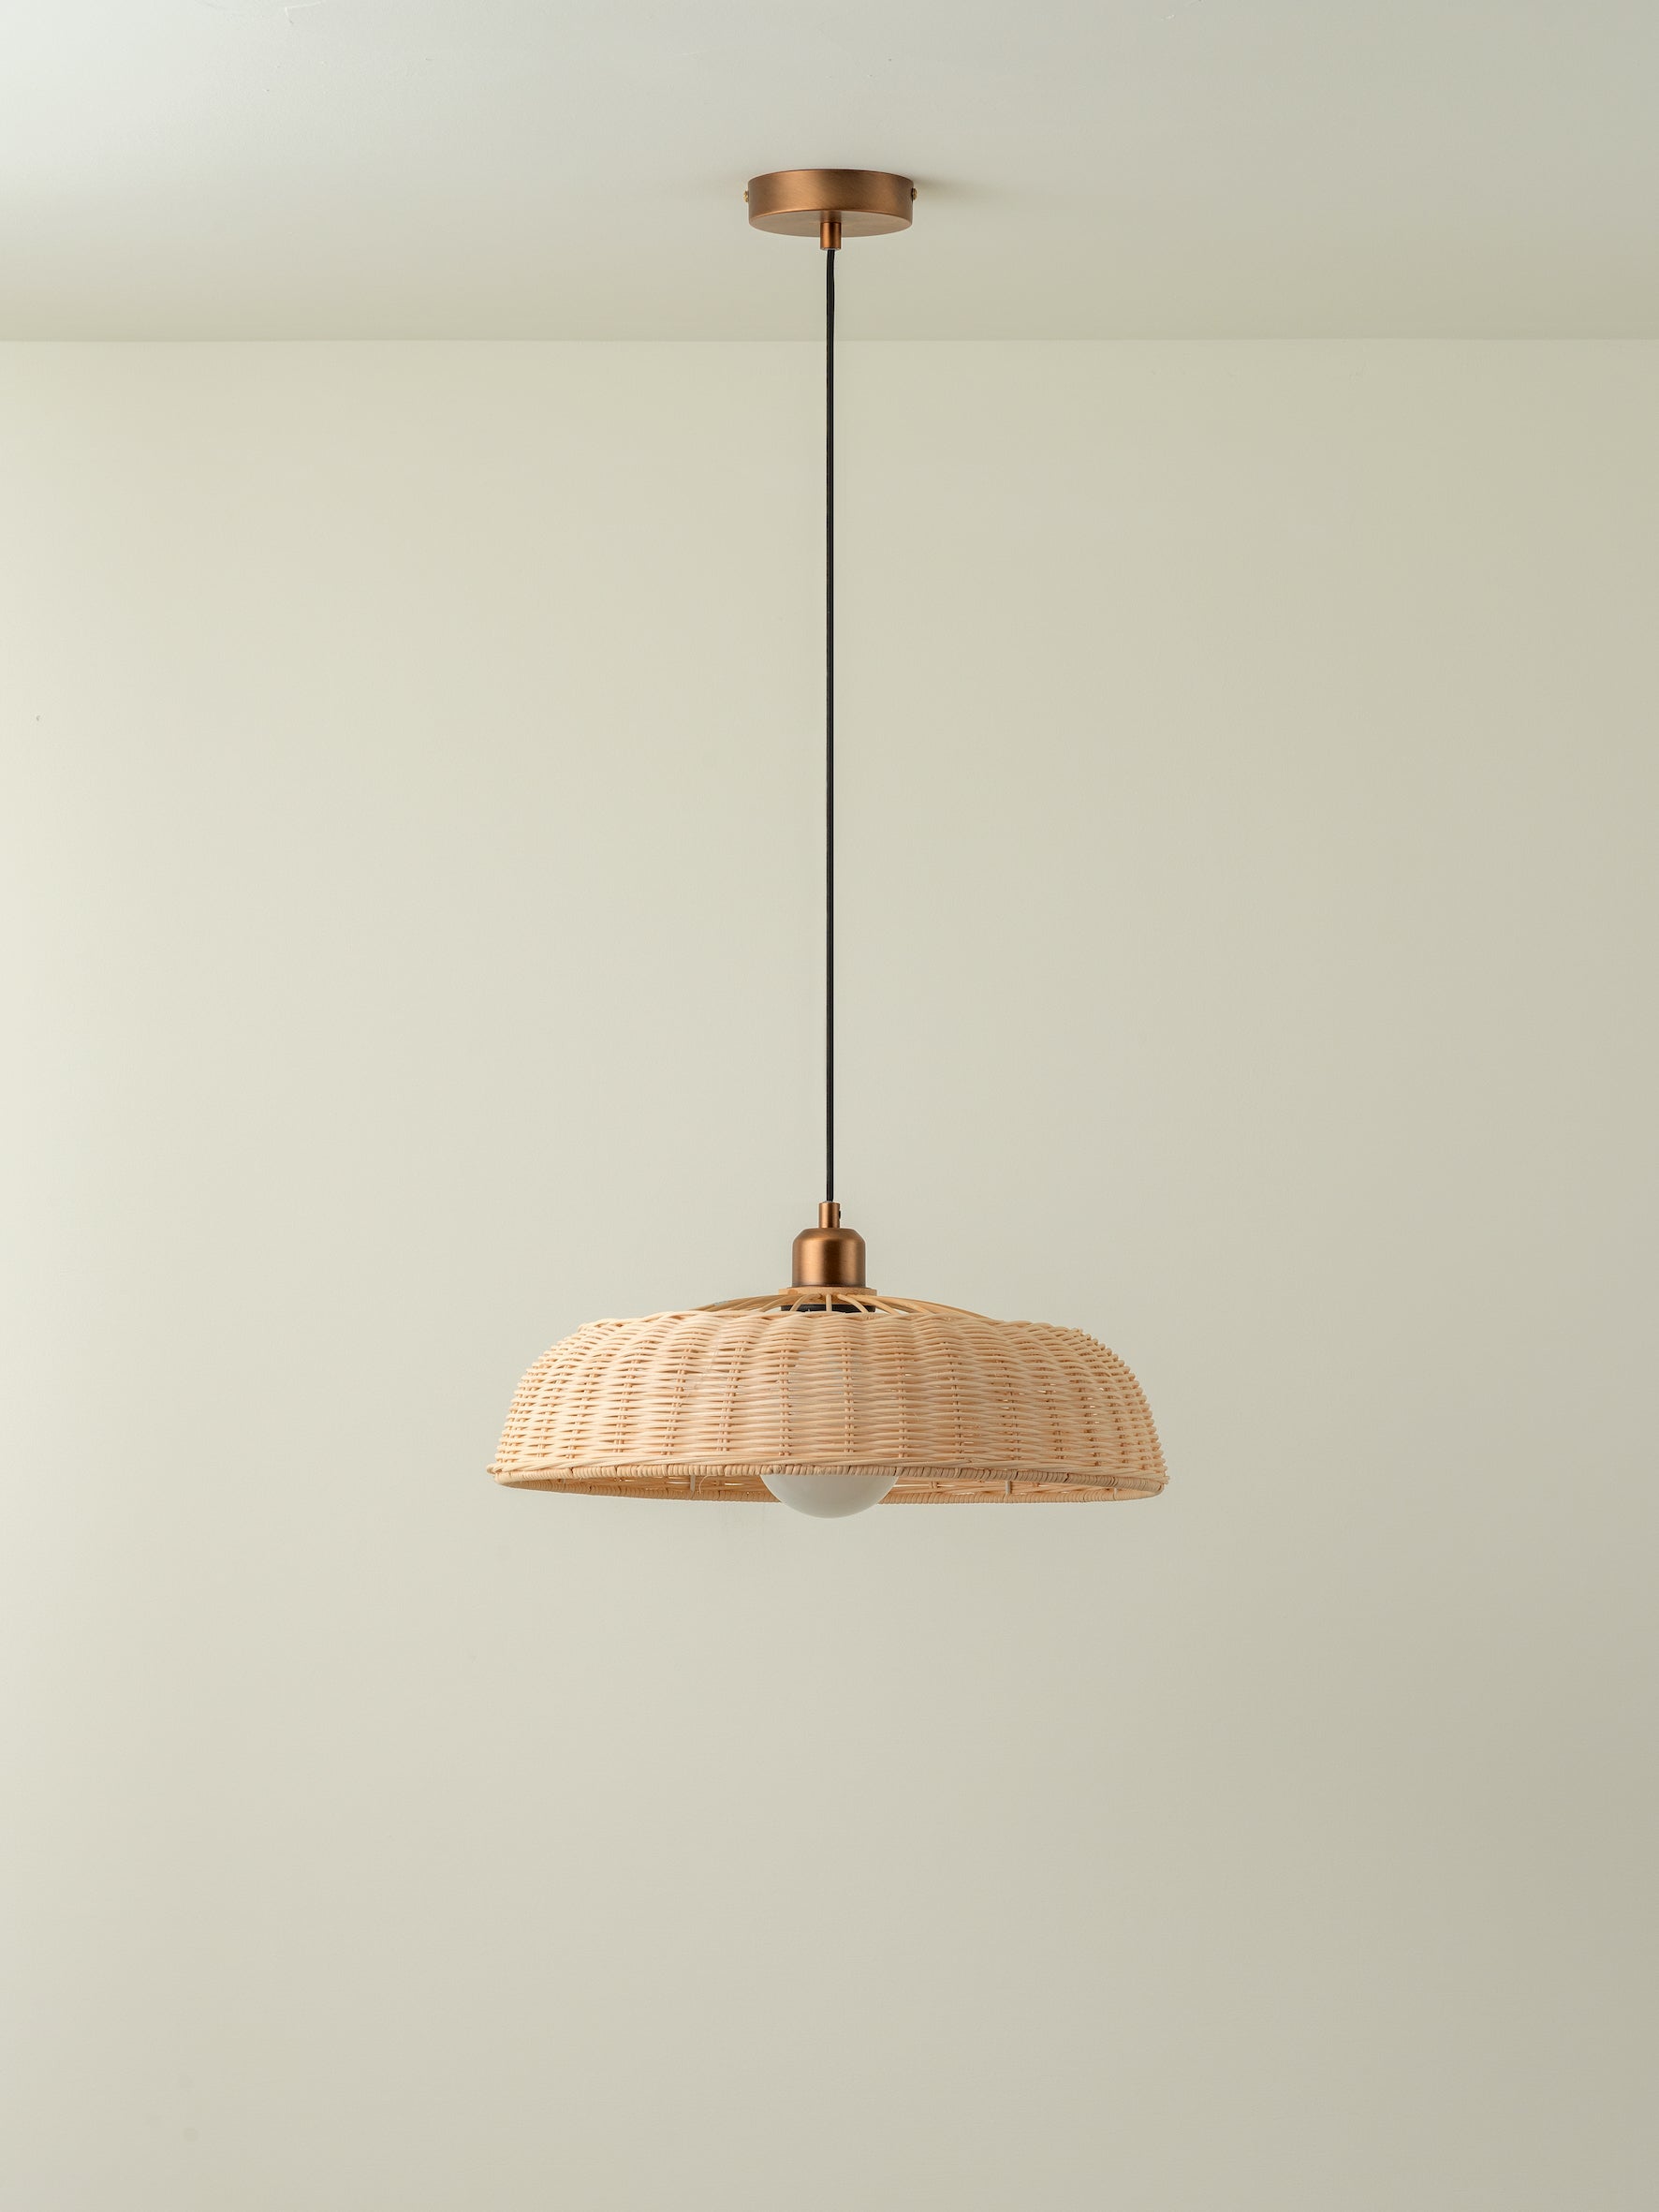 Capel - 1 light burnished brass drop cap lampholder kit | Ceiling Light | Lights & Lamps | UK